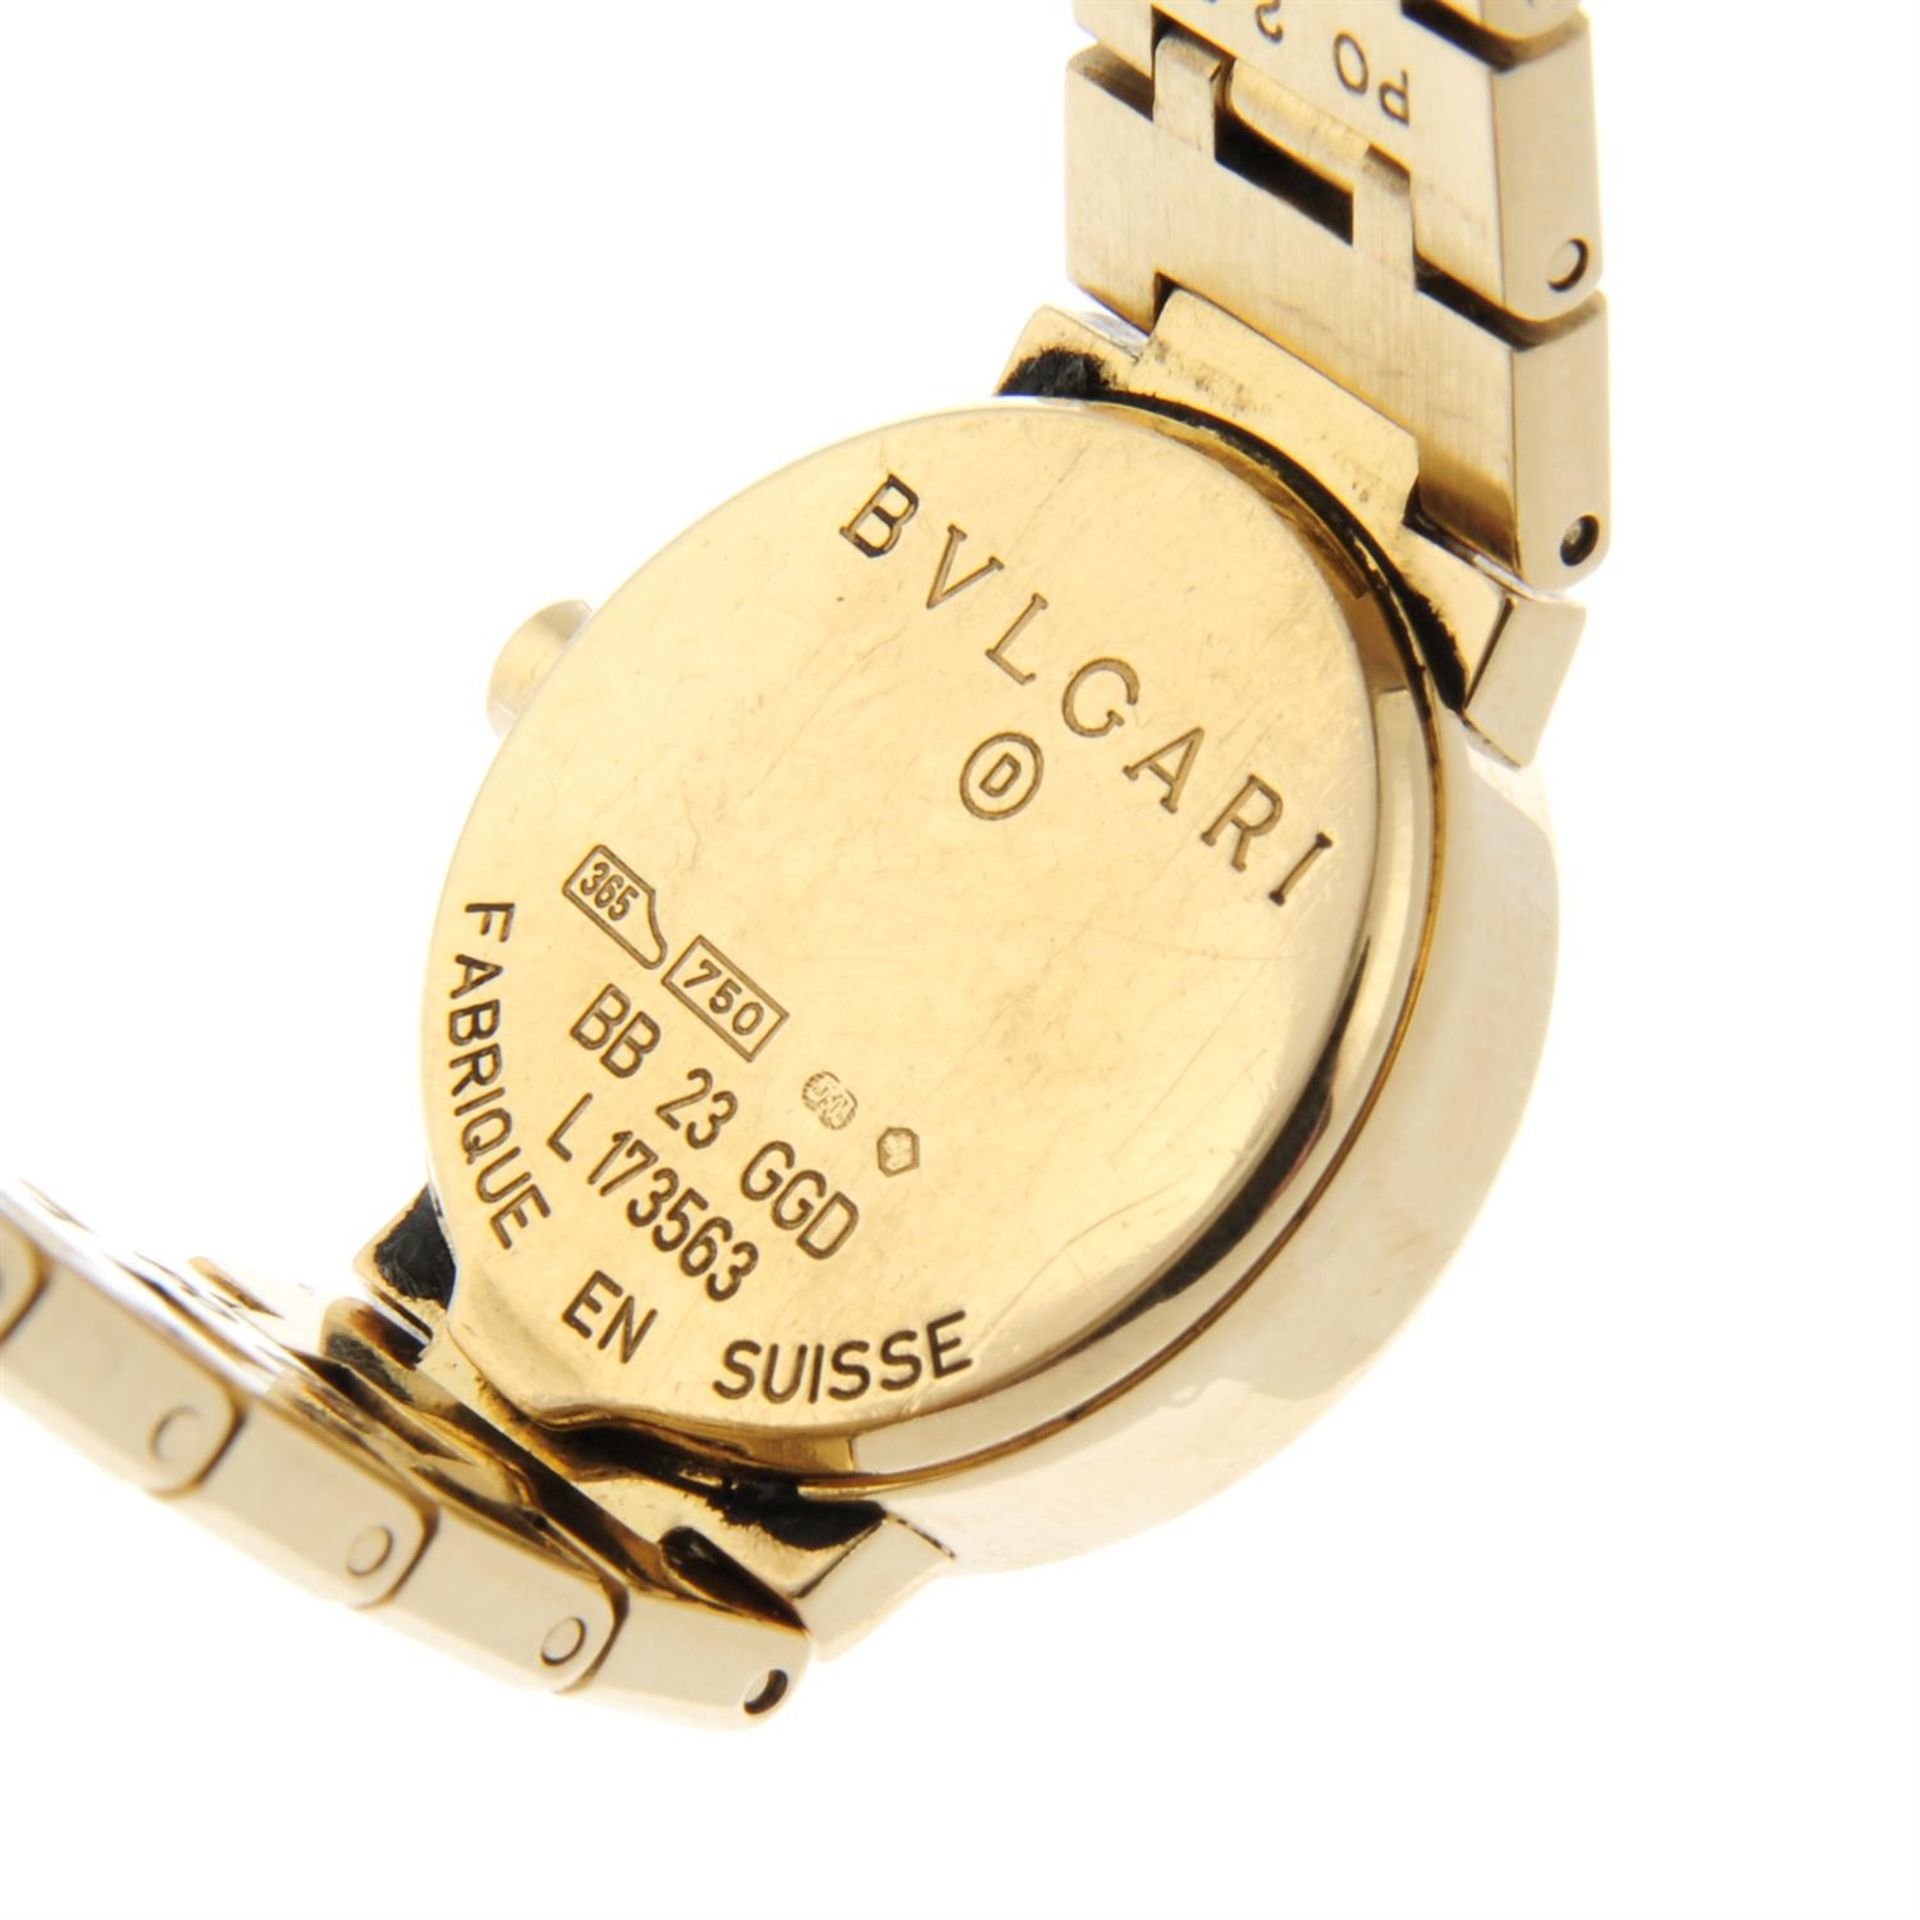 BULGARI - an 18ct yellow gold Bulgari bracelet watch, 23mm. - Image 4 of 4